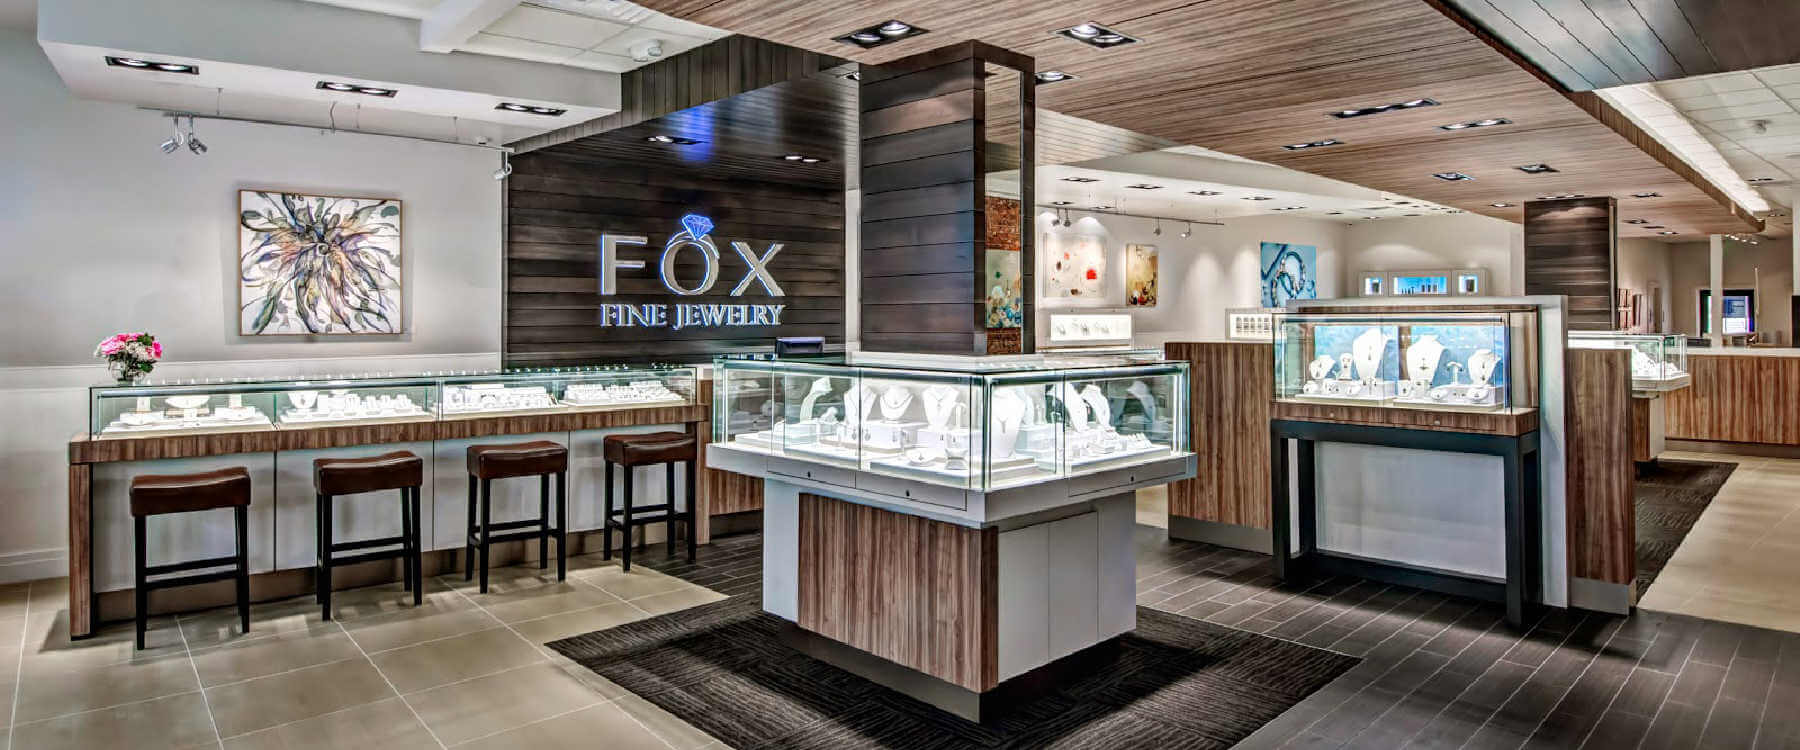 Inside of Fox Fine Jewelry located in Ventura CA